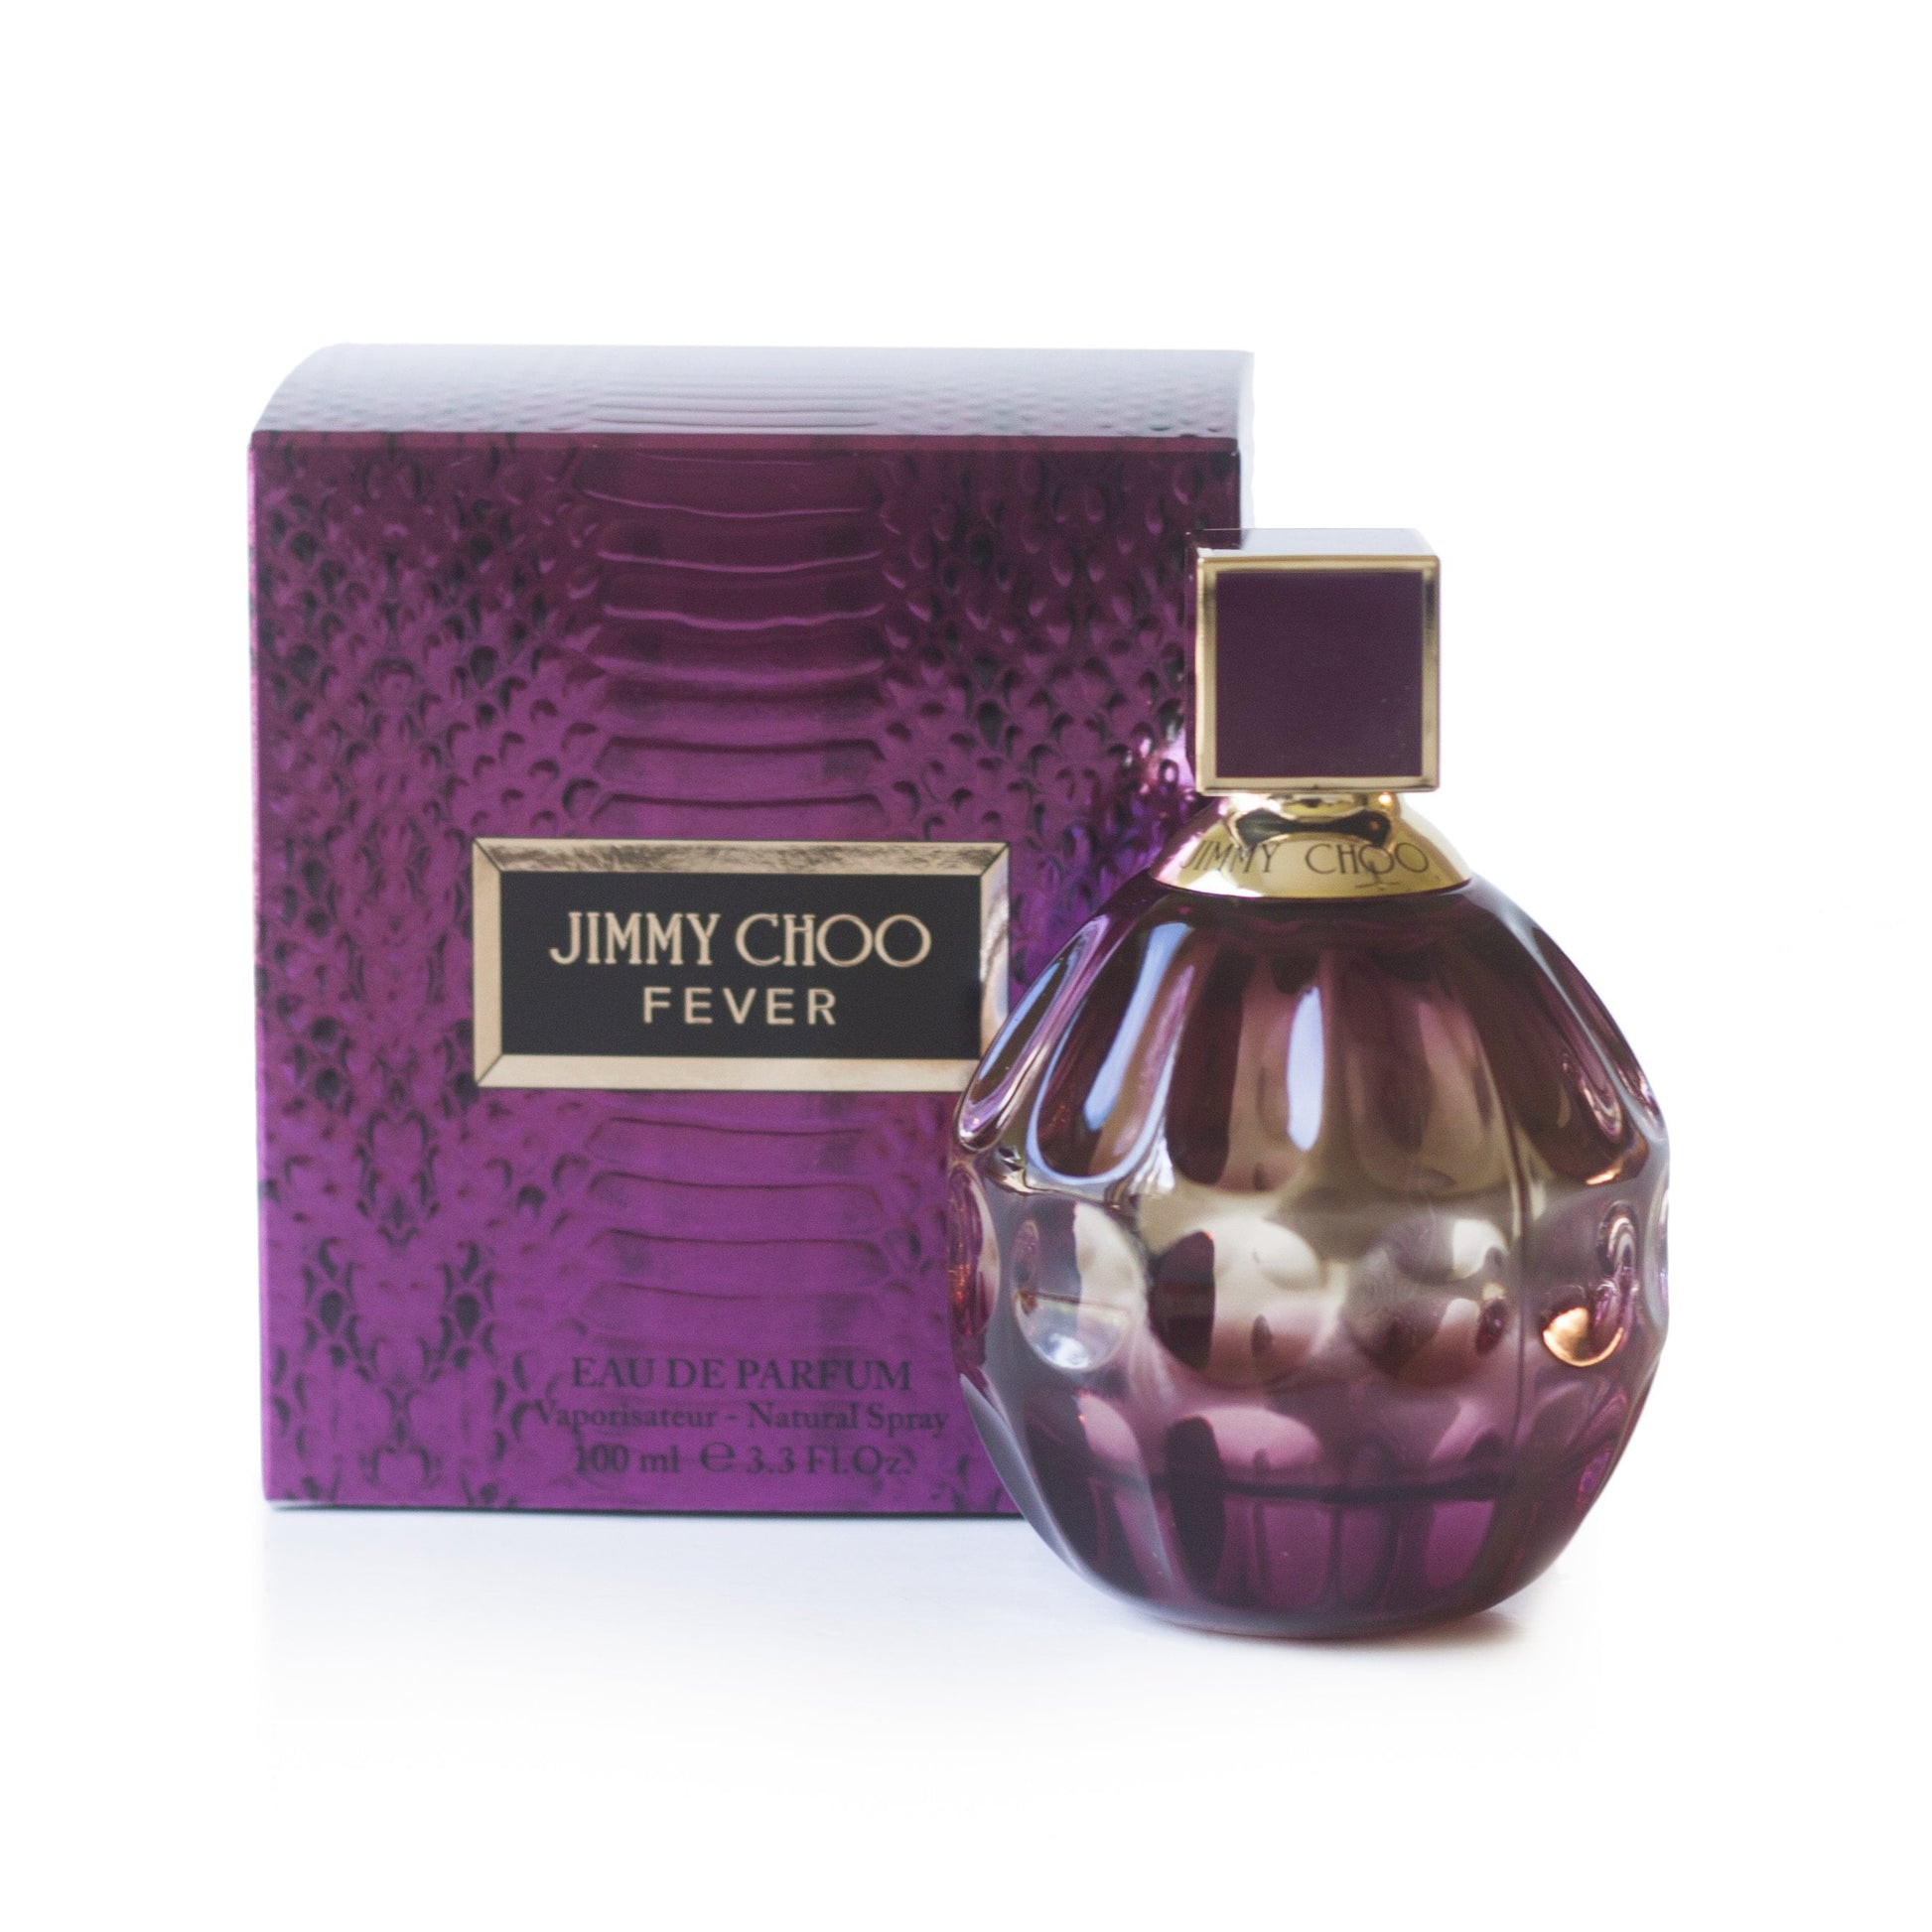 Jimmy Choo Fever Eau de Parfum Spray for Women by Jimmy Choo, Product image 1